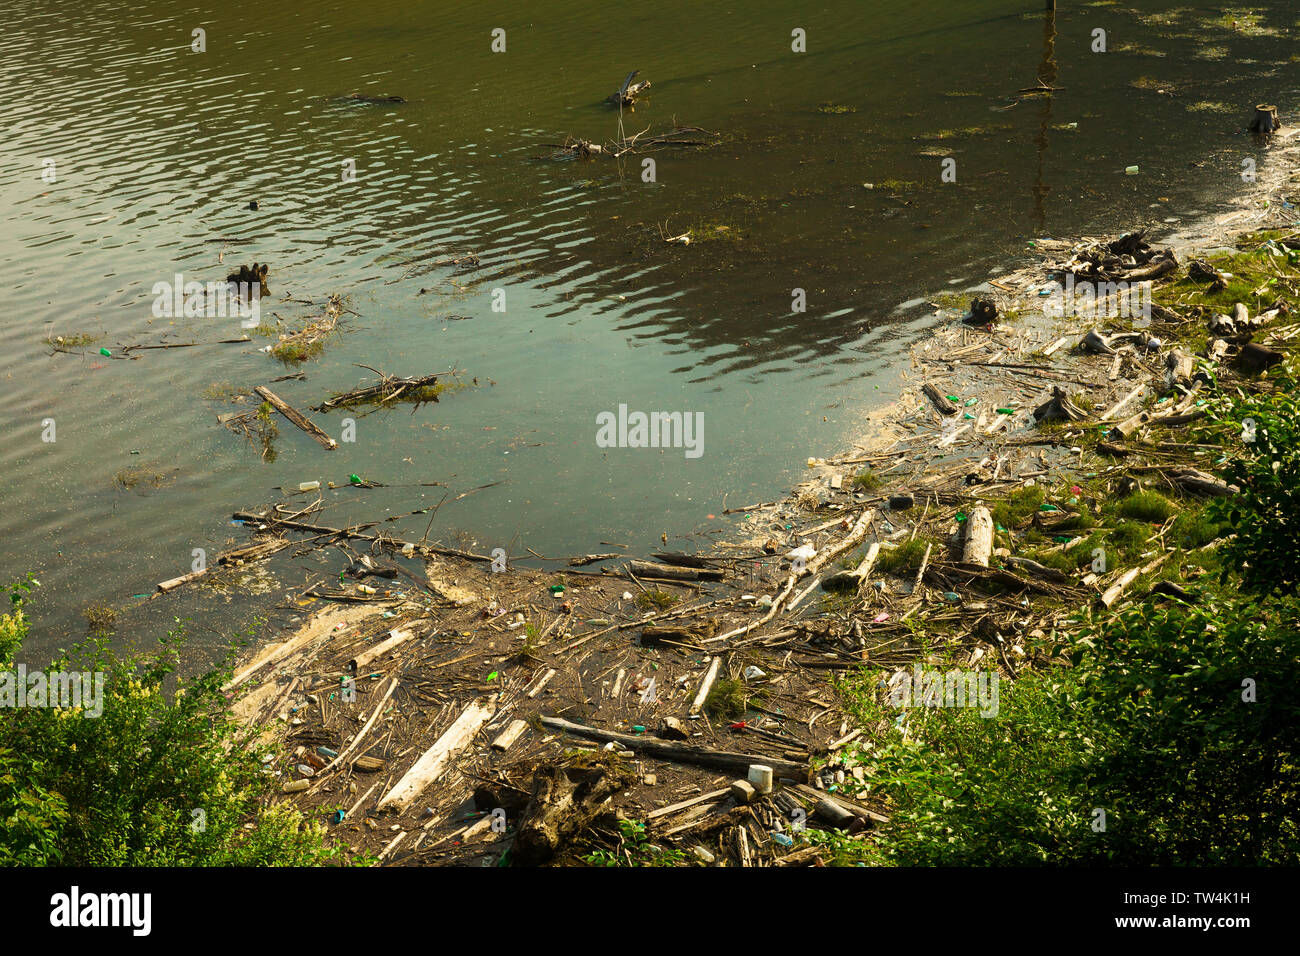 Vanære pyramide udstilling lake pollution in nature, environment problem Stock Photo - Alamy